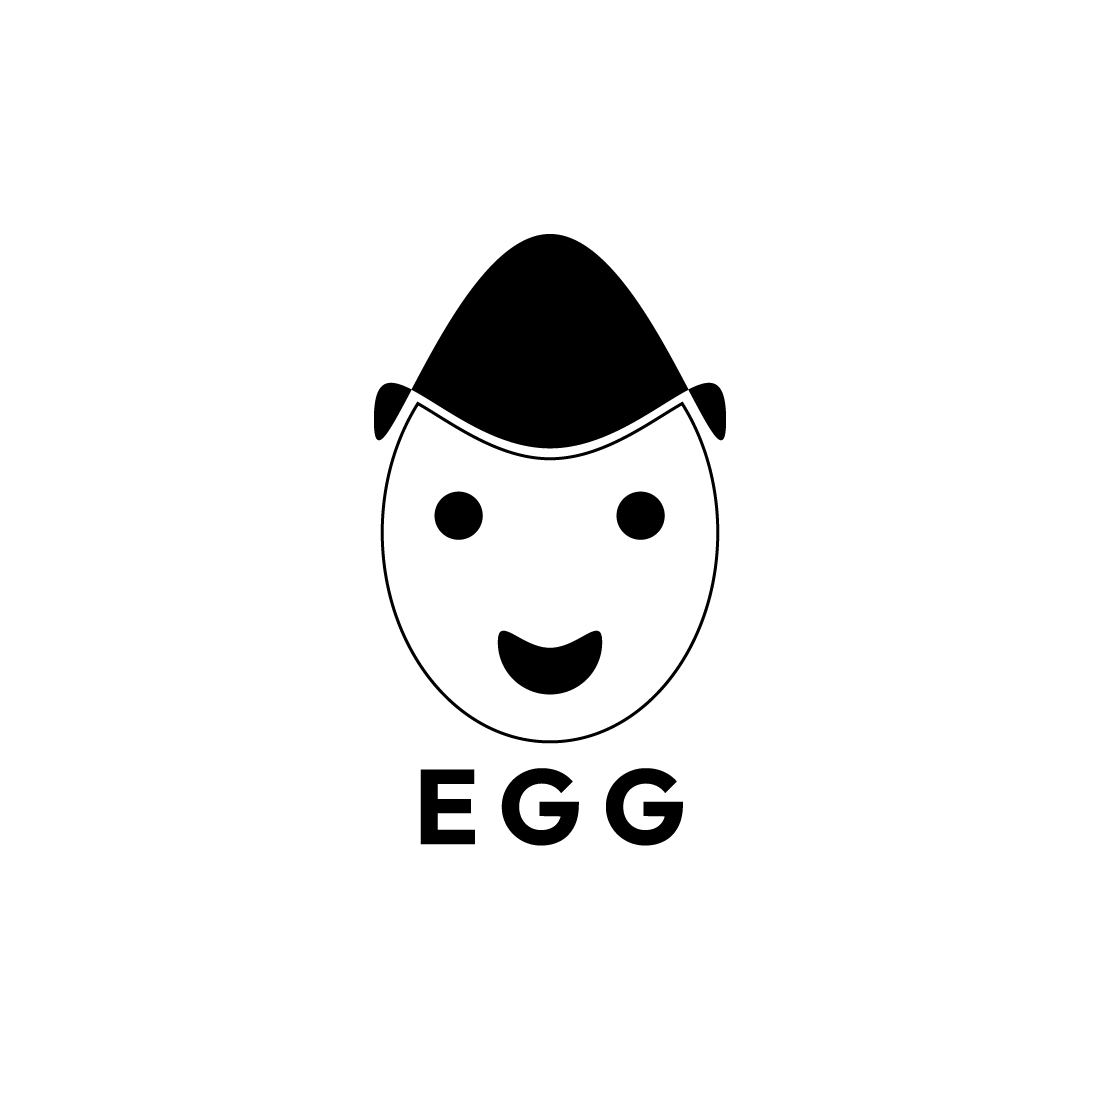 Minimalist Food Egg Logo cover image.